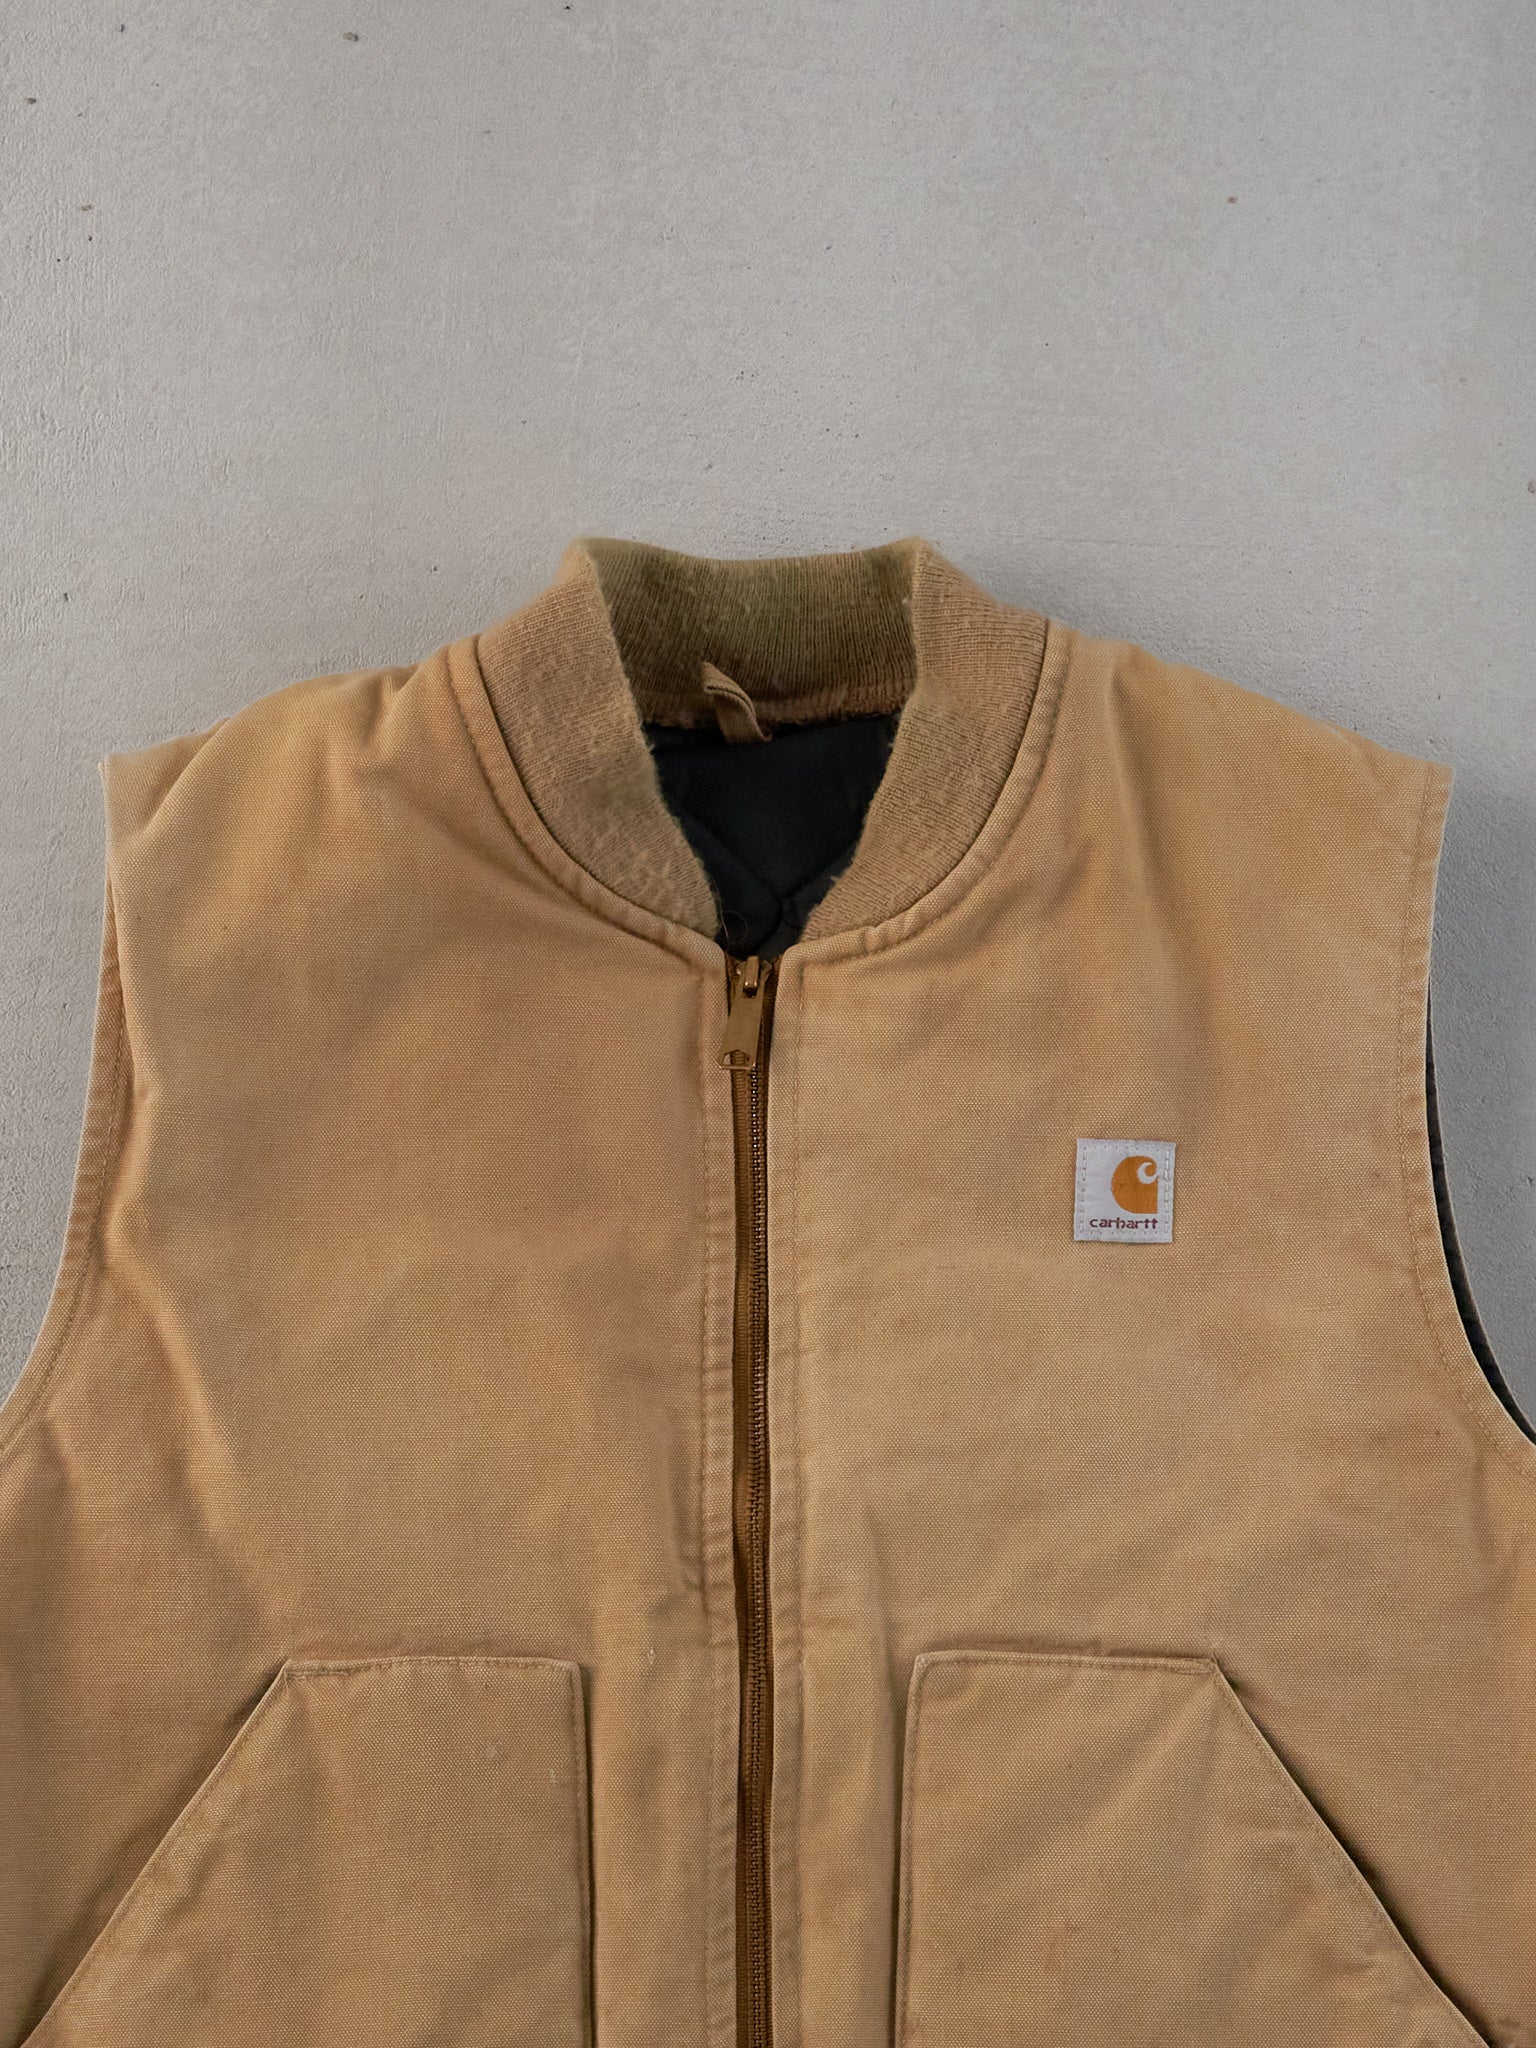 Vintage 90s Khaki Carhartt Workwear Vest (L)